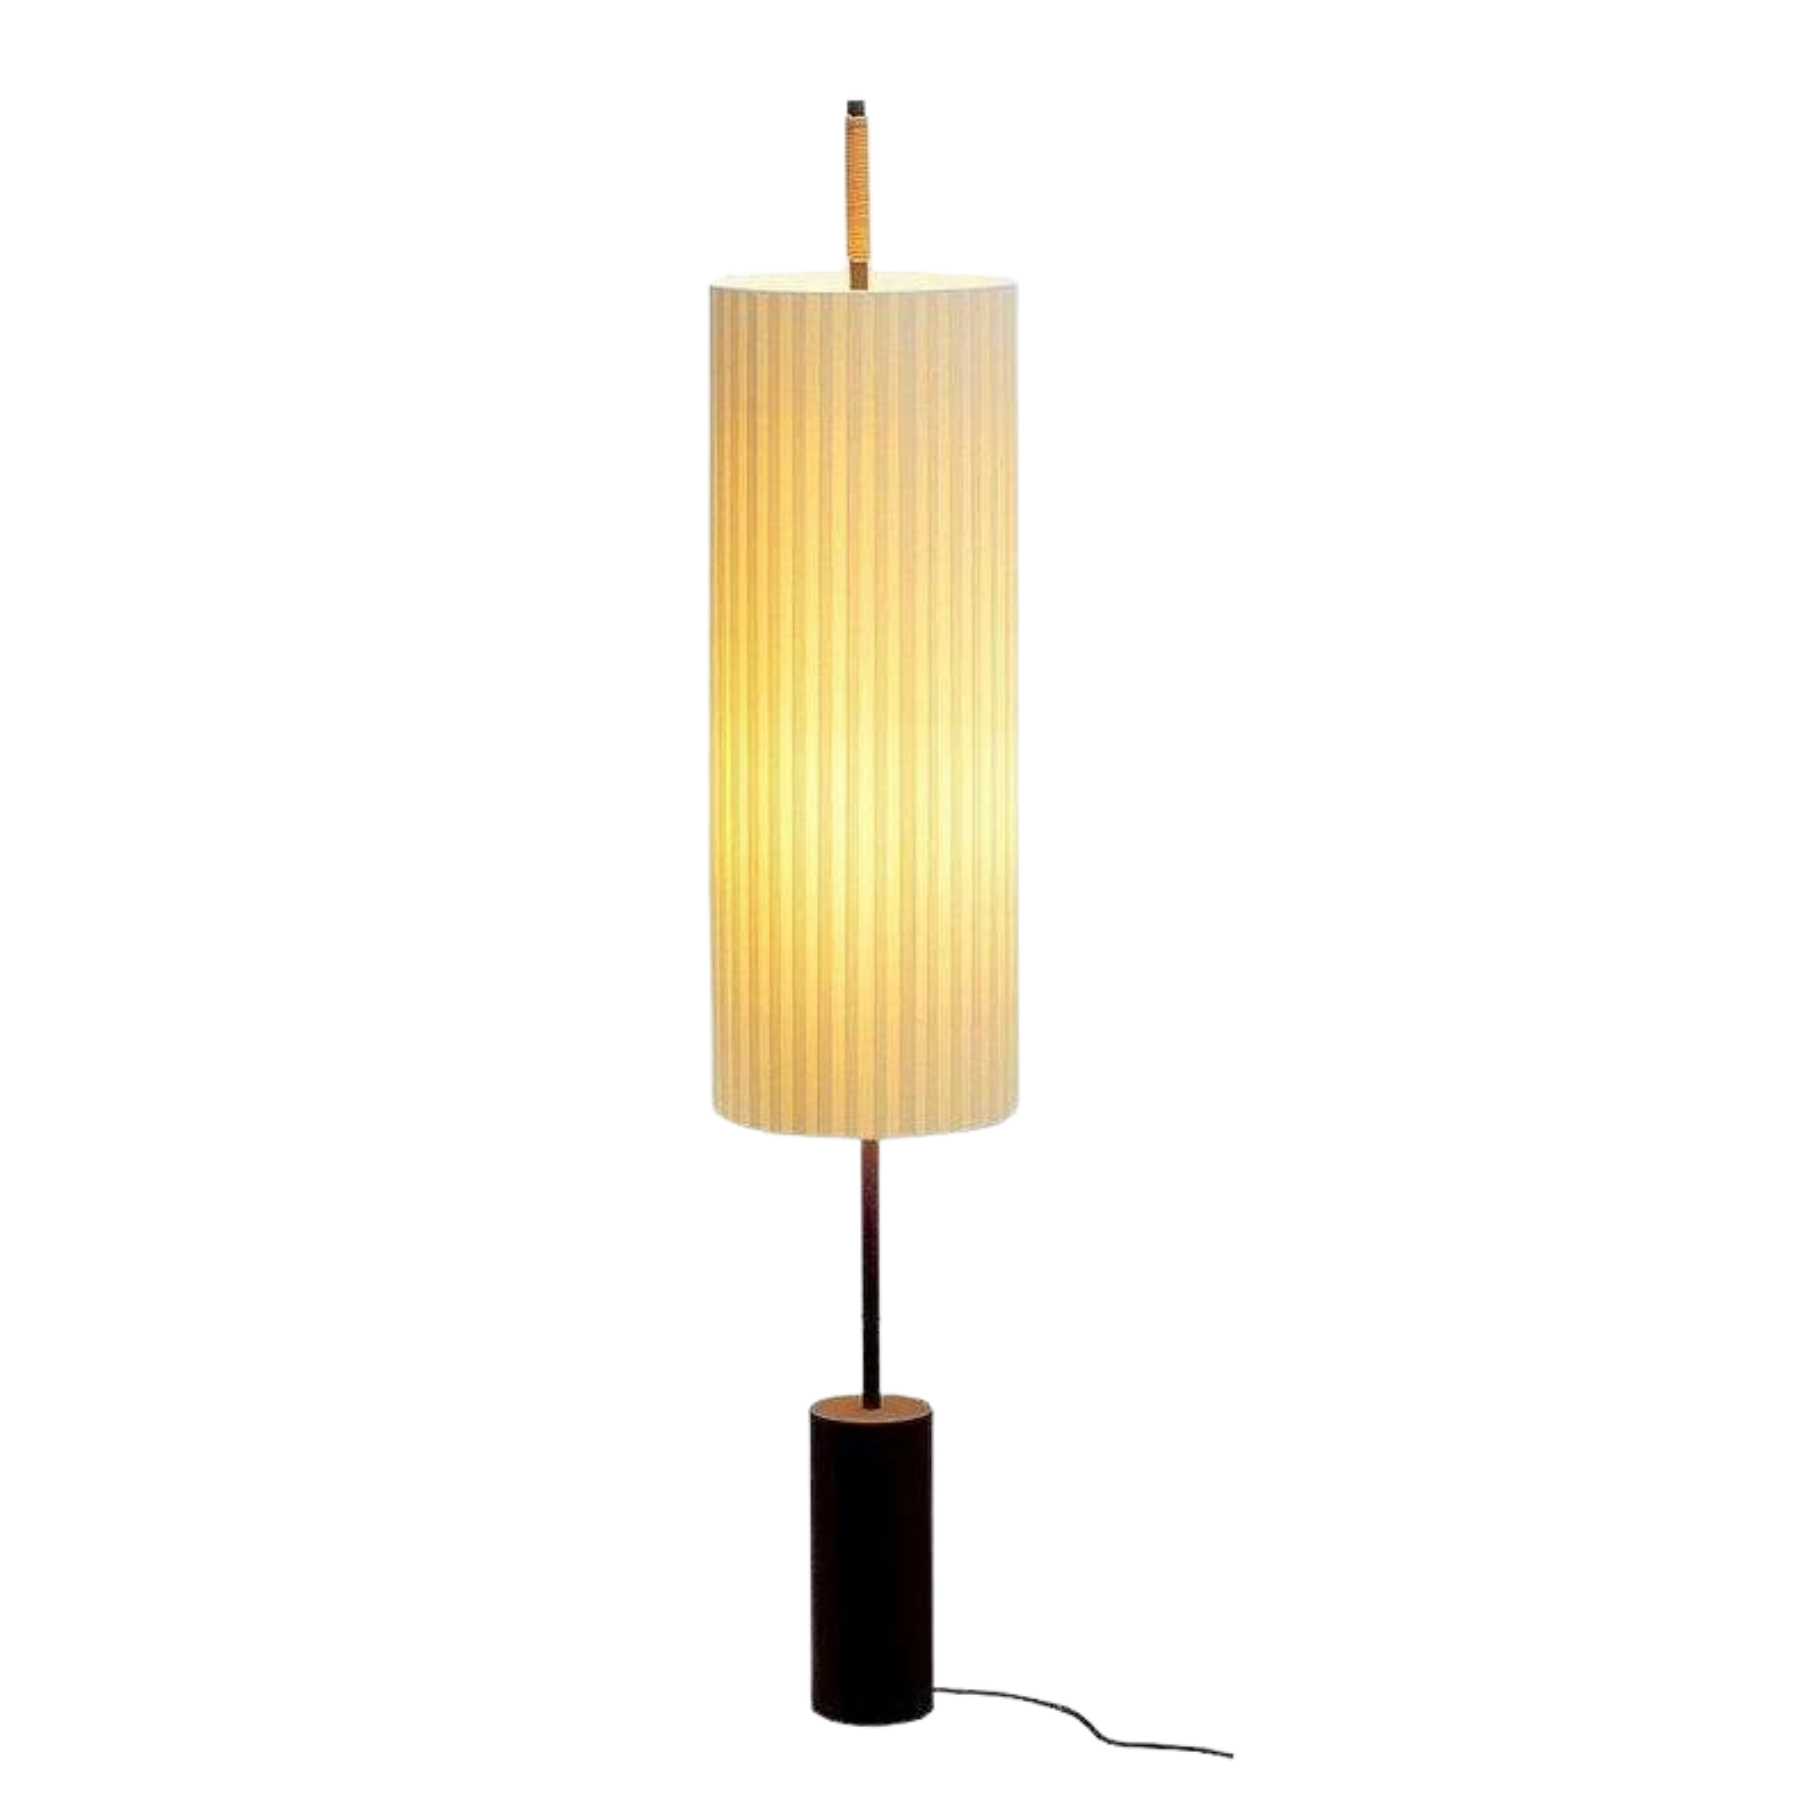 Lampe Dorica by Jordi Miralbell